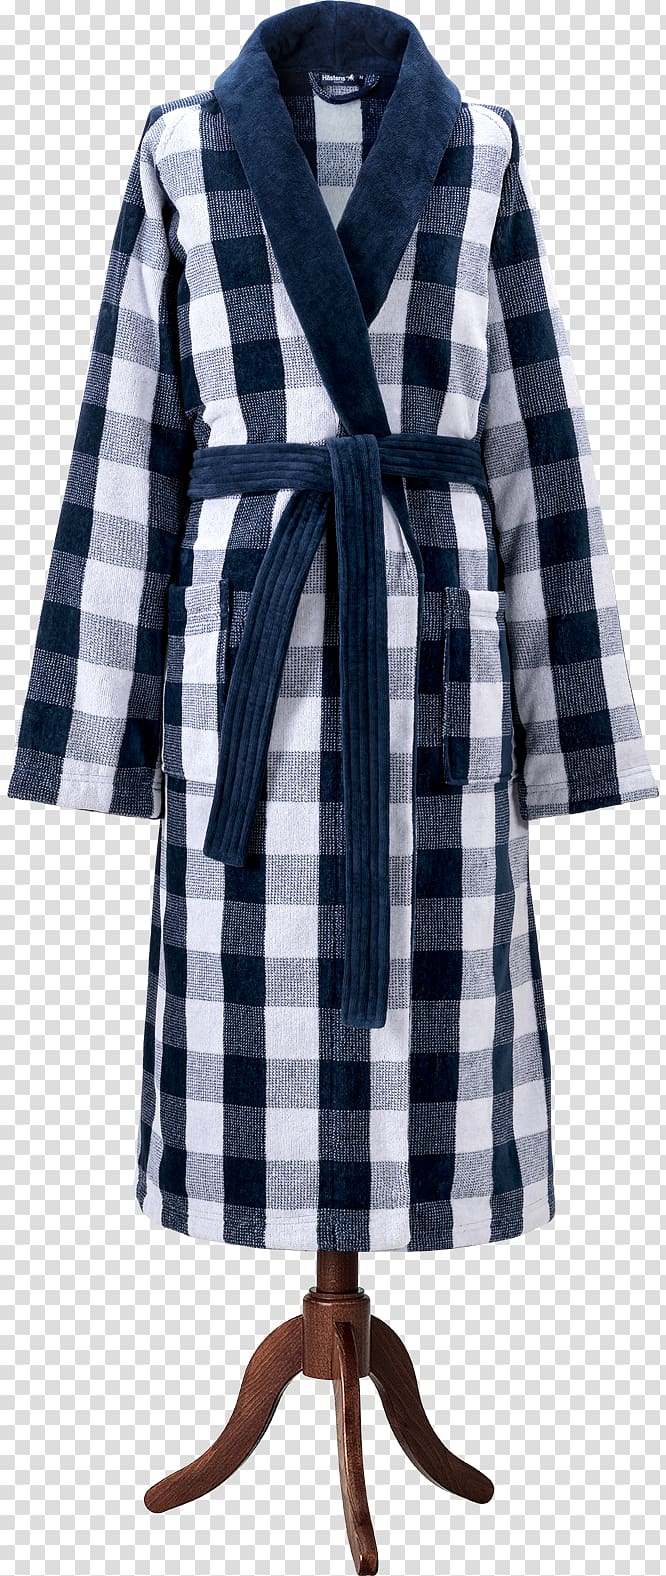 Bathrobe Pajamas Nightwear Dress, dress transparent background PNG clipart